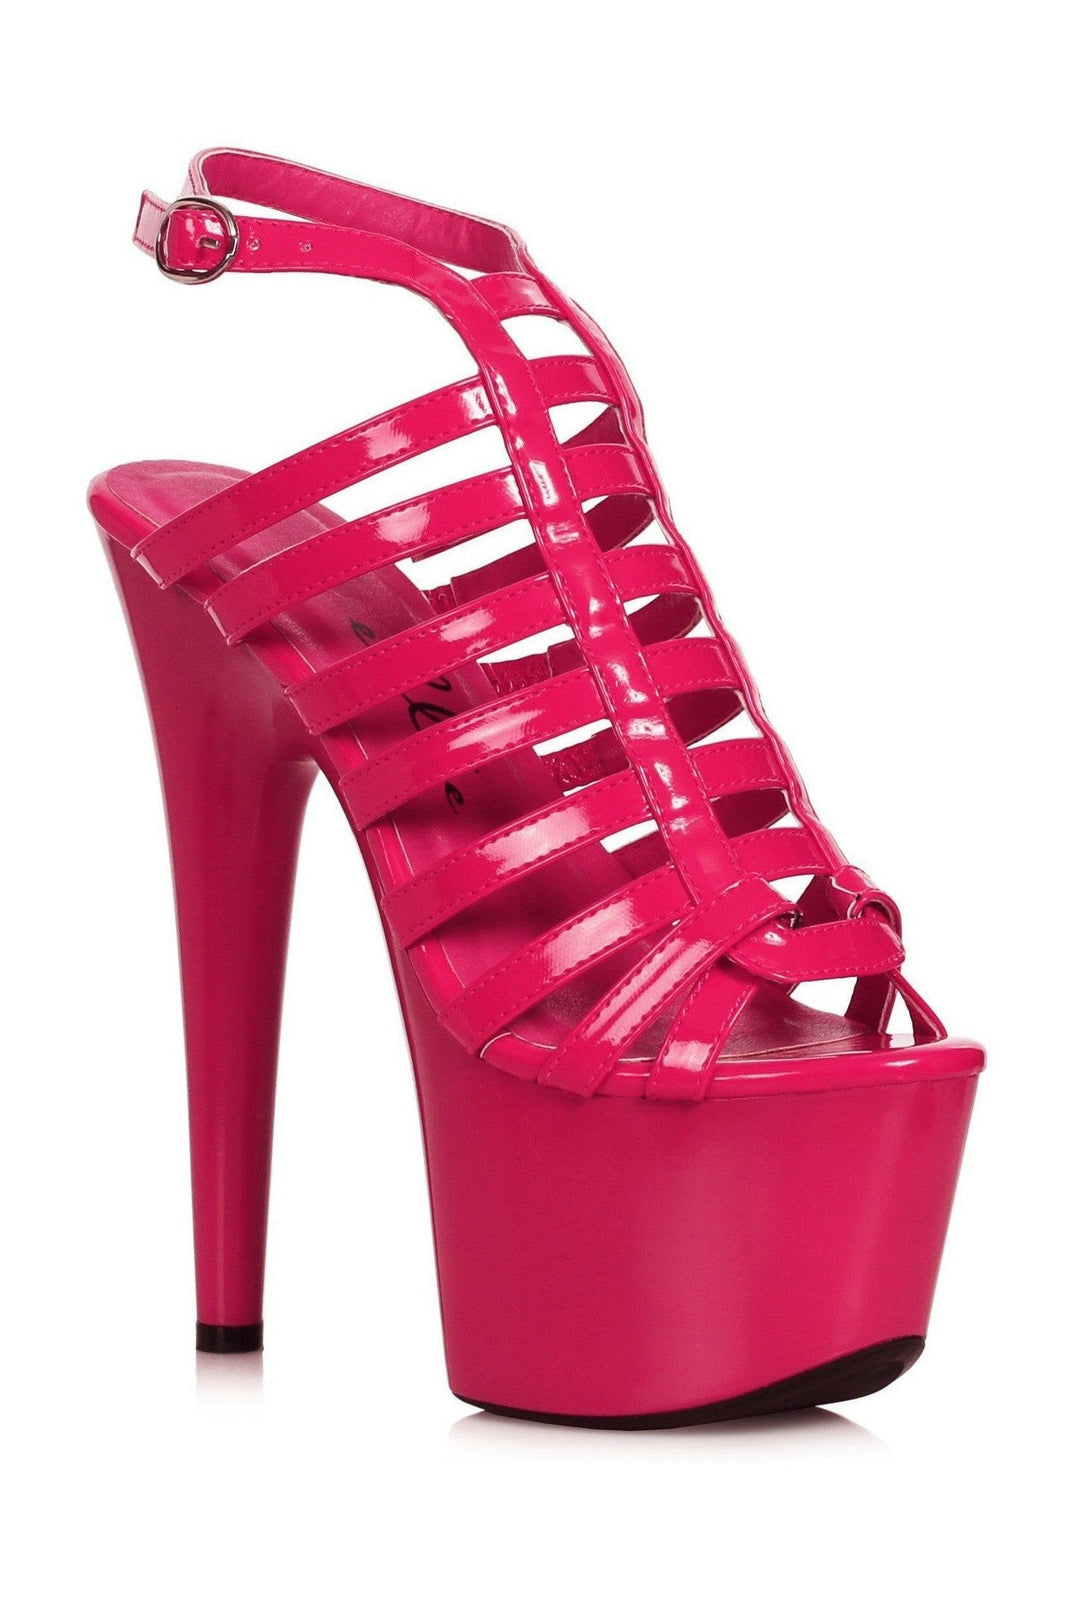 Ellie Shoes Fuchsia Sandals Platform Stripper Shoes | Buy at Sexyshoes.com